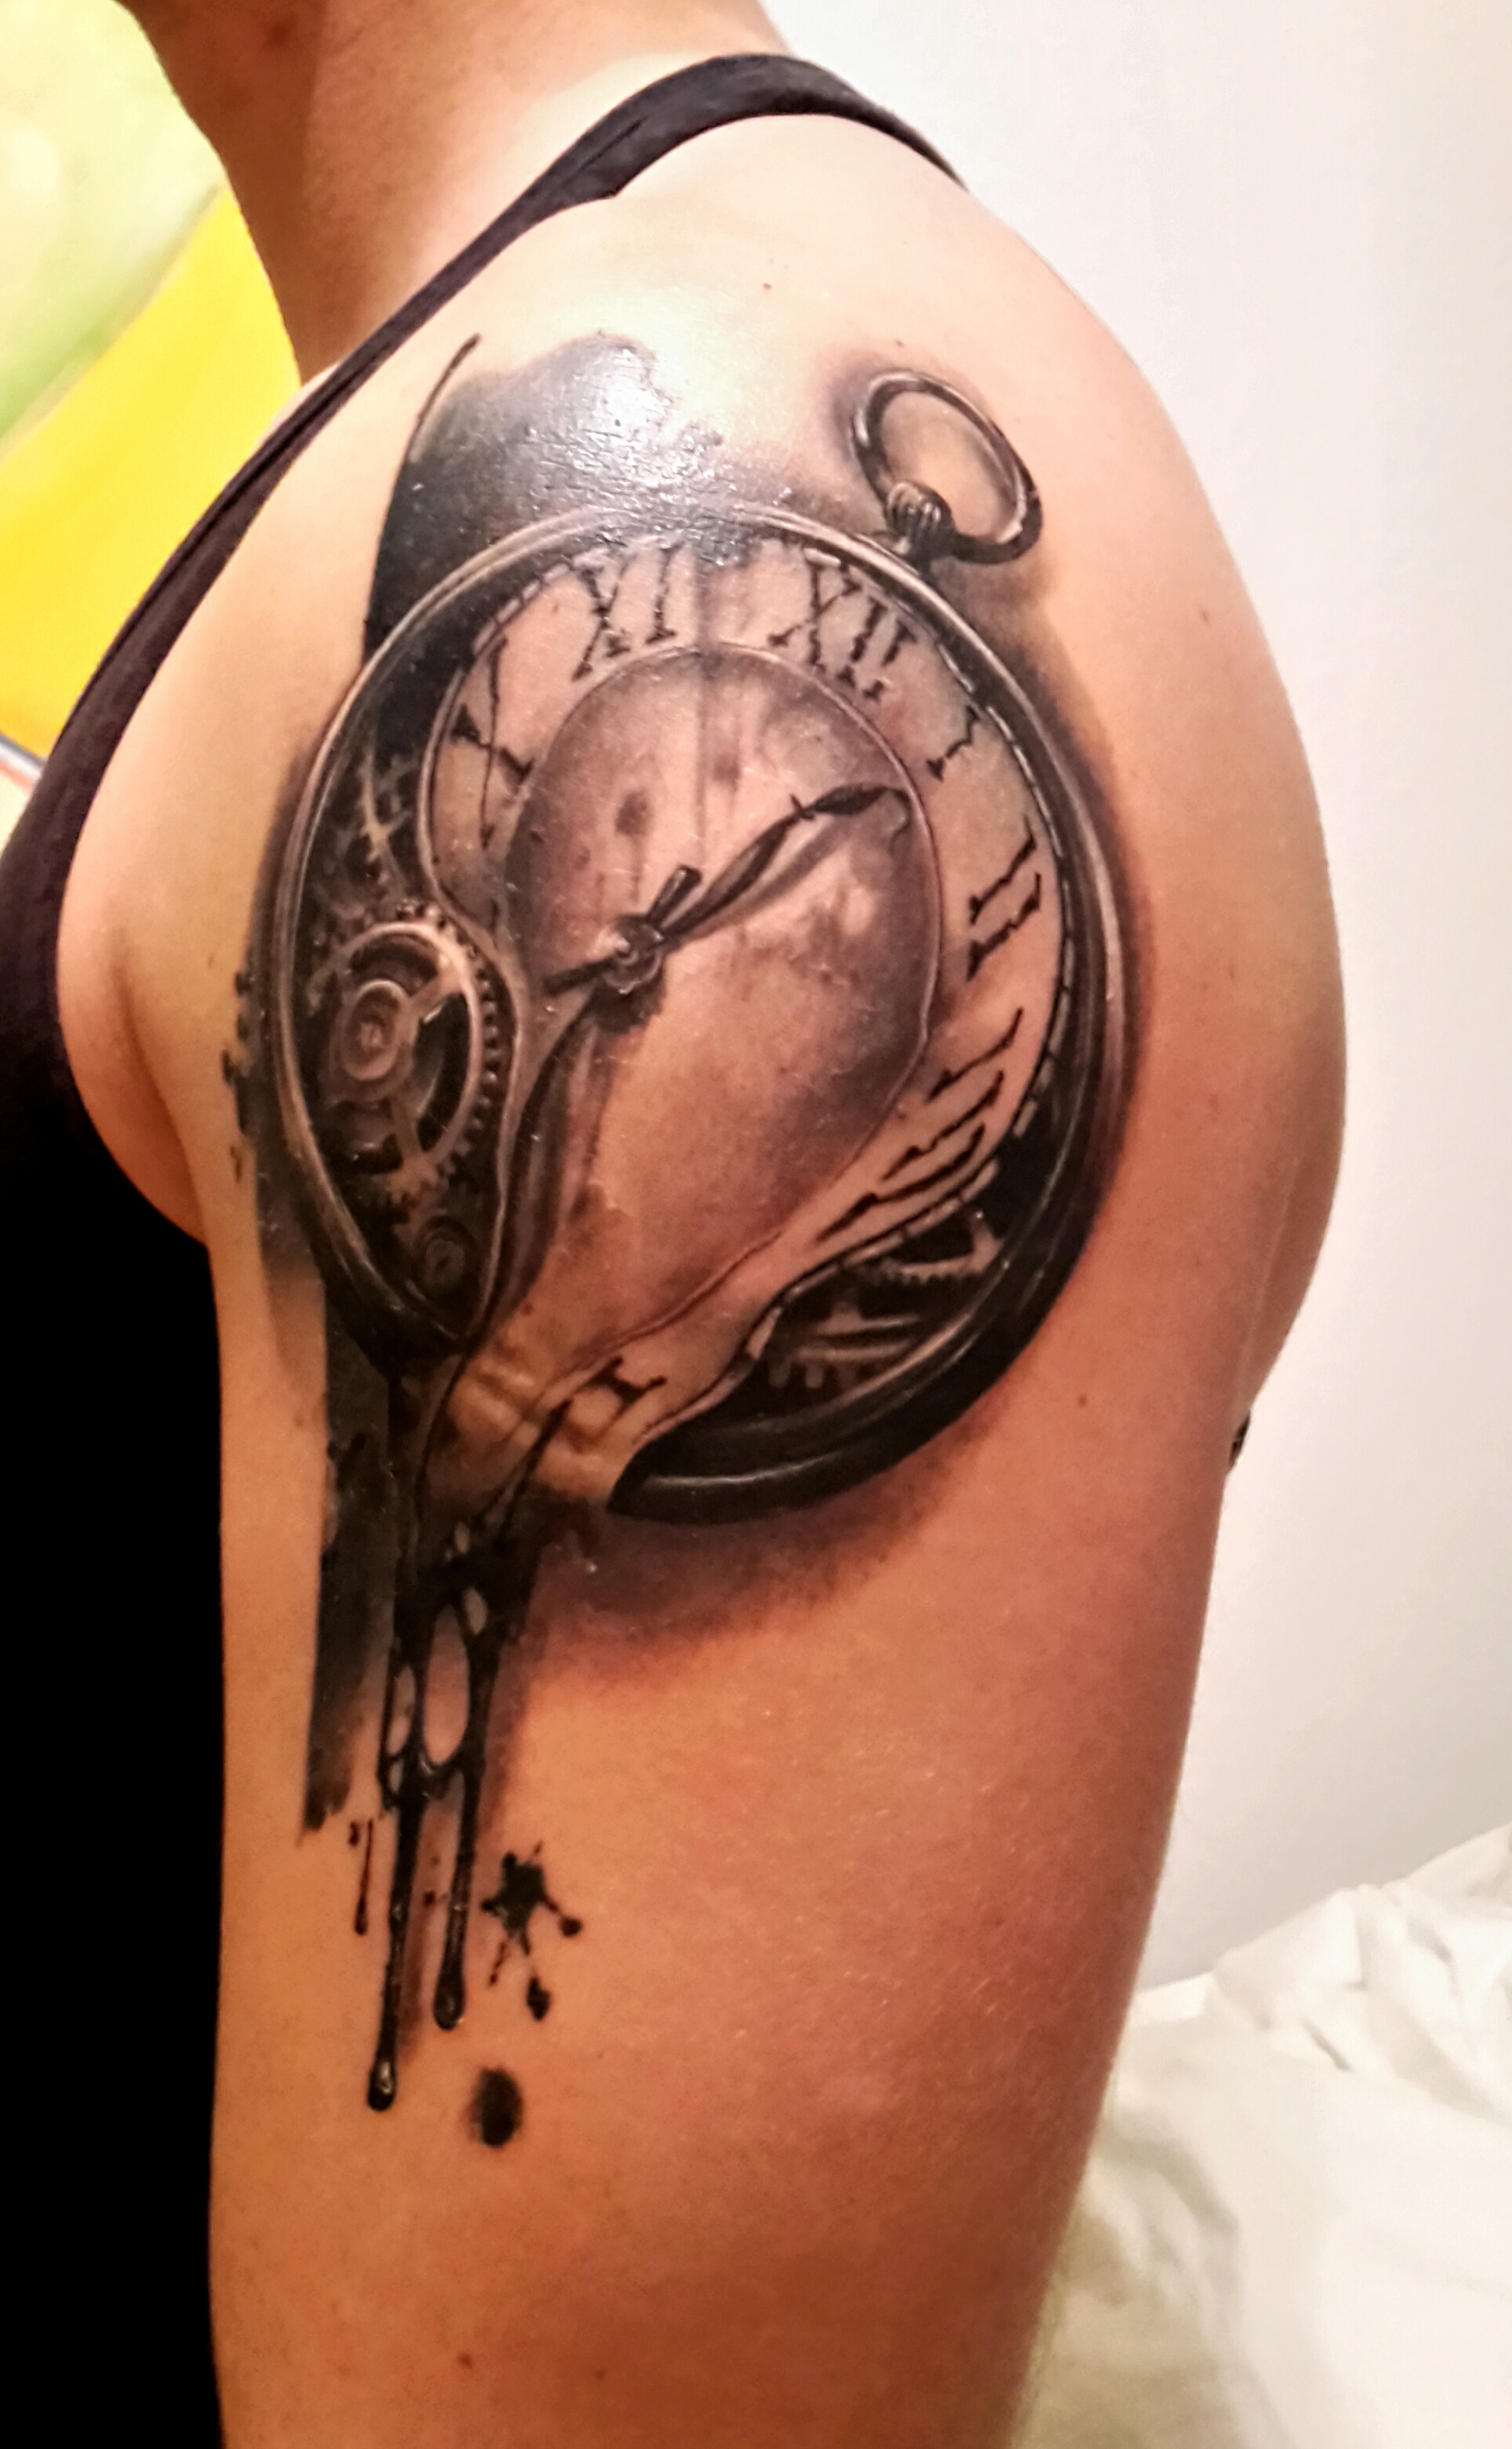 Uhr tattoo dali Dalí's soft